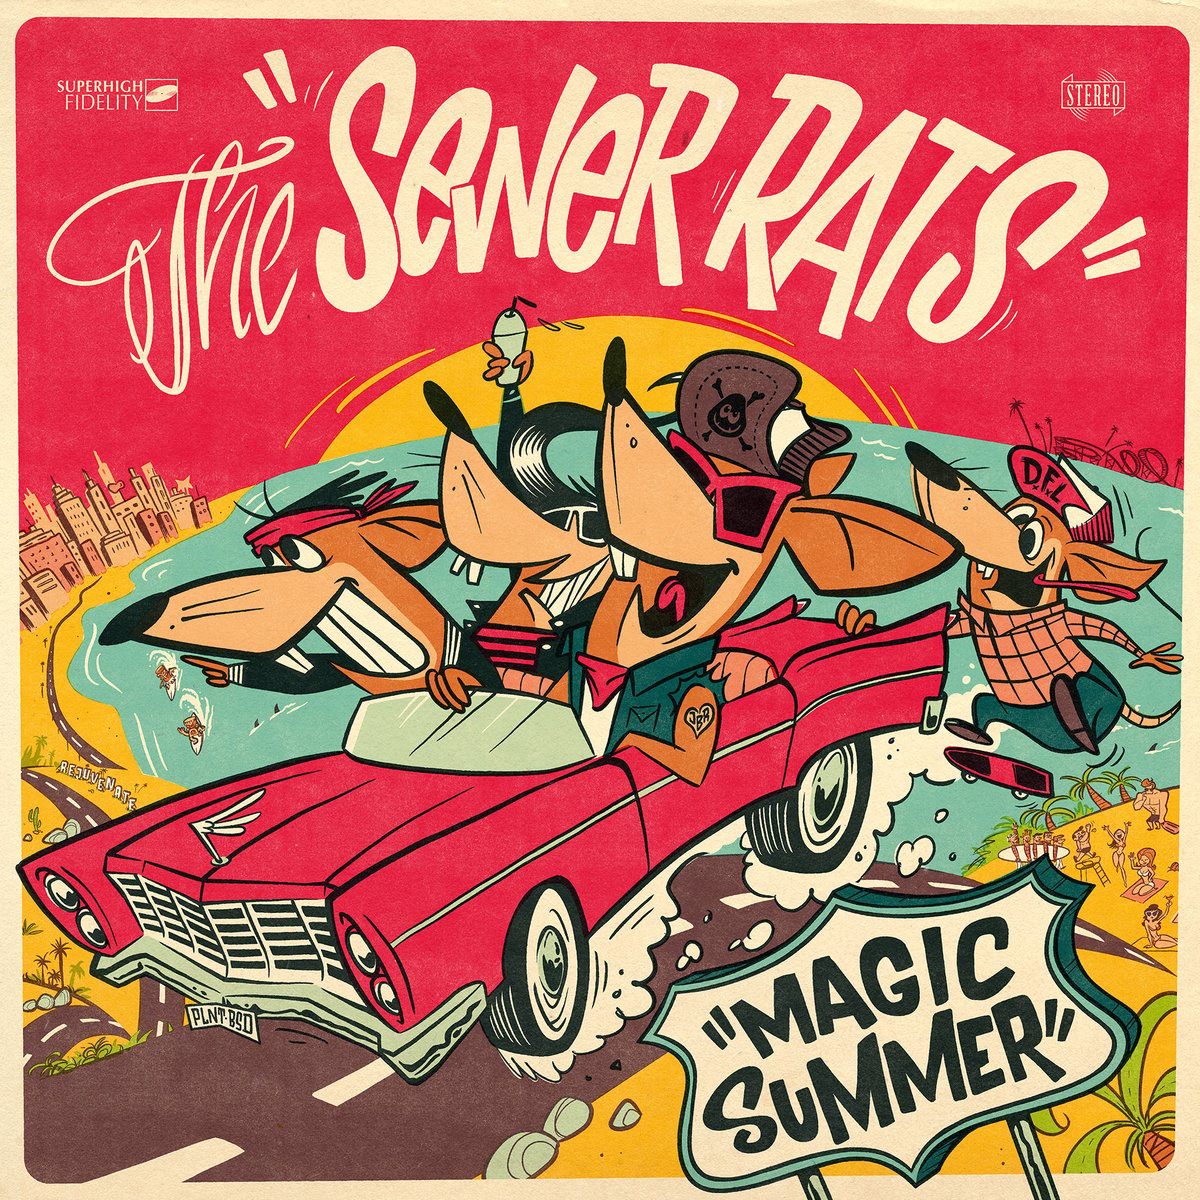 The Sewer Rats - Magic Summer